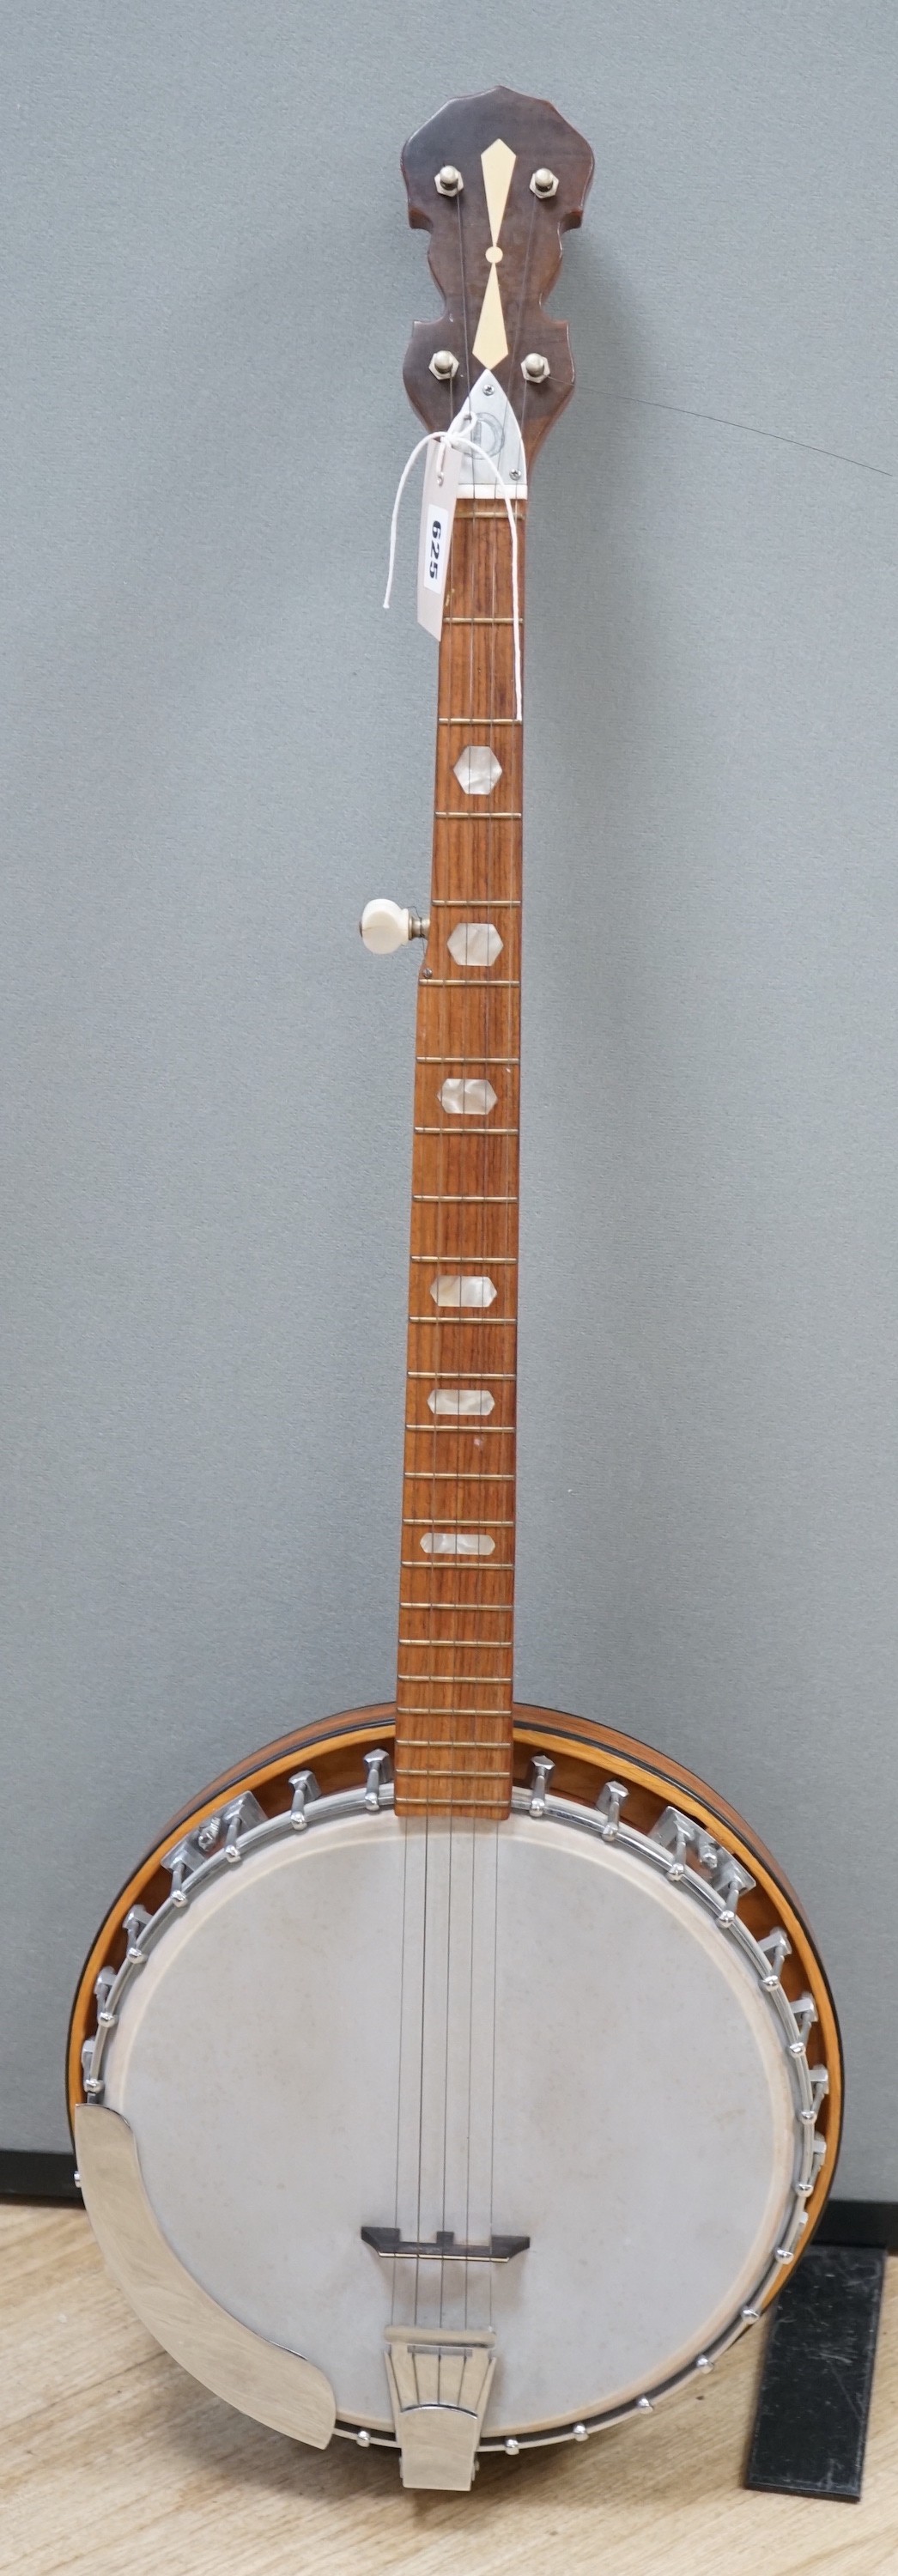 A five string banjo made by John Degay of Degay Guitars